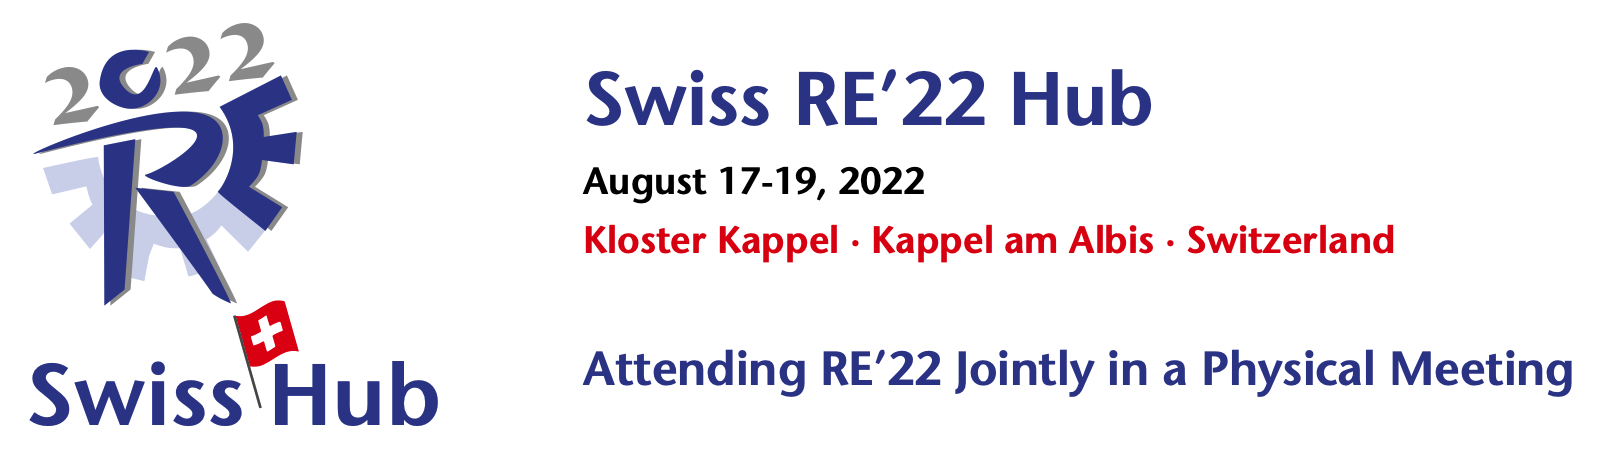 Swiss RE'22 Hub Logo